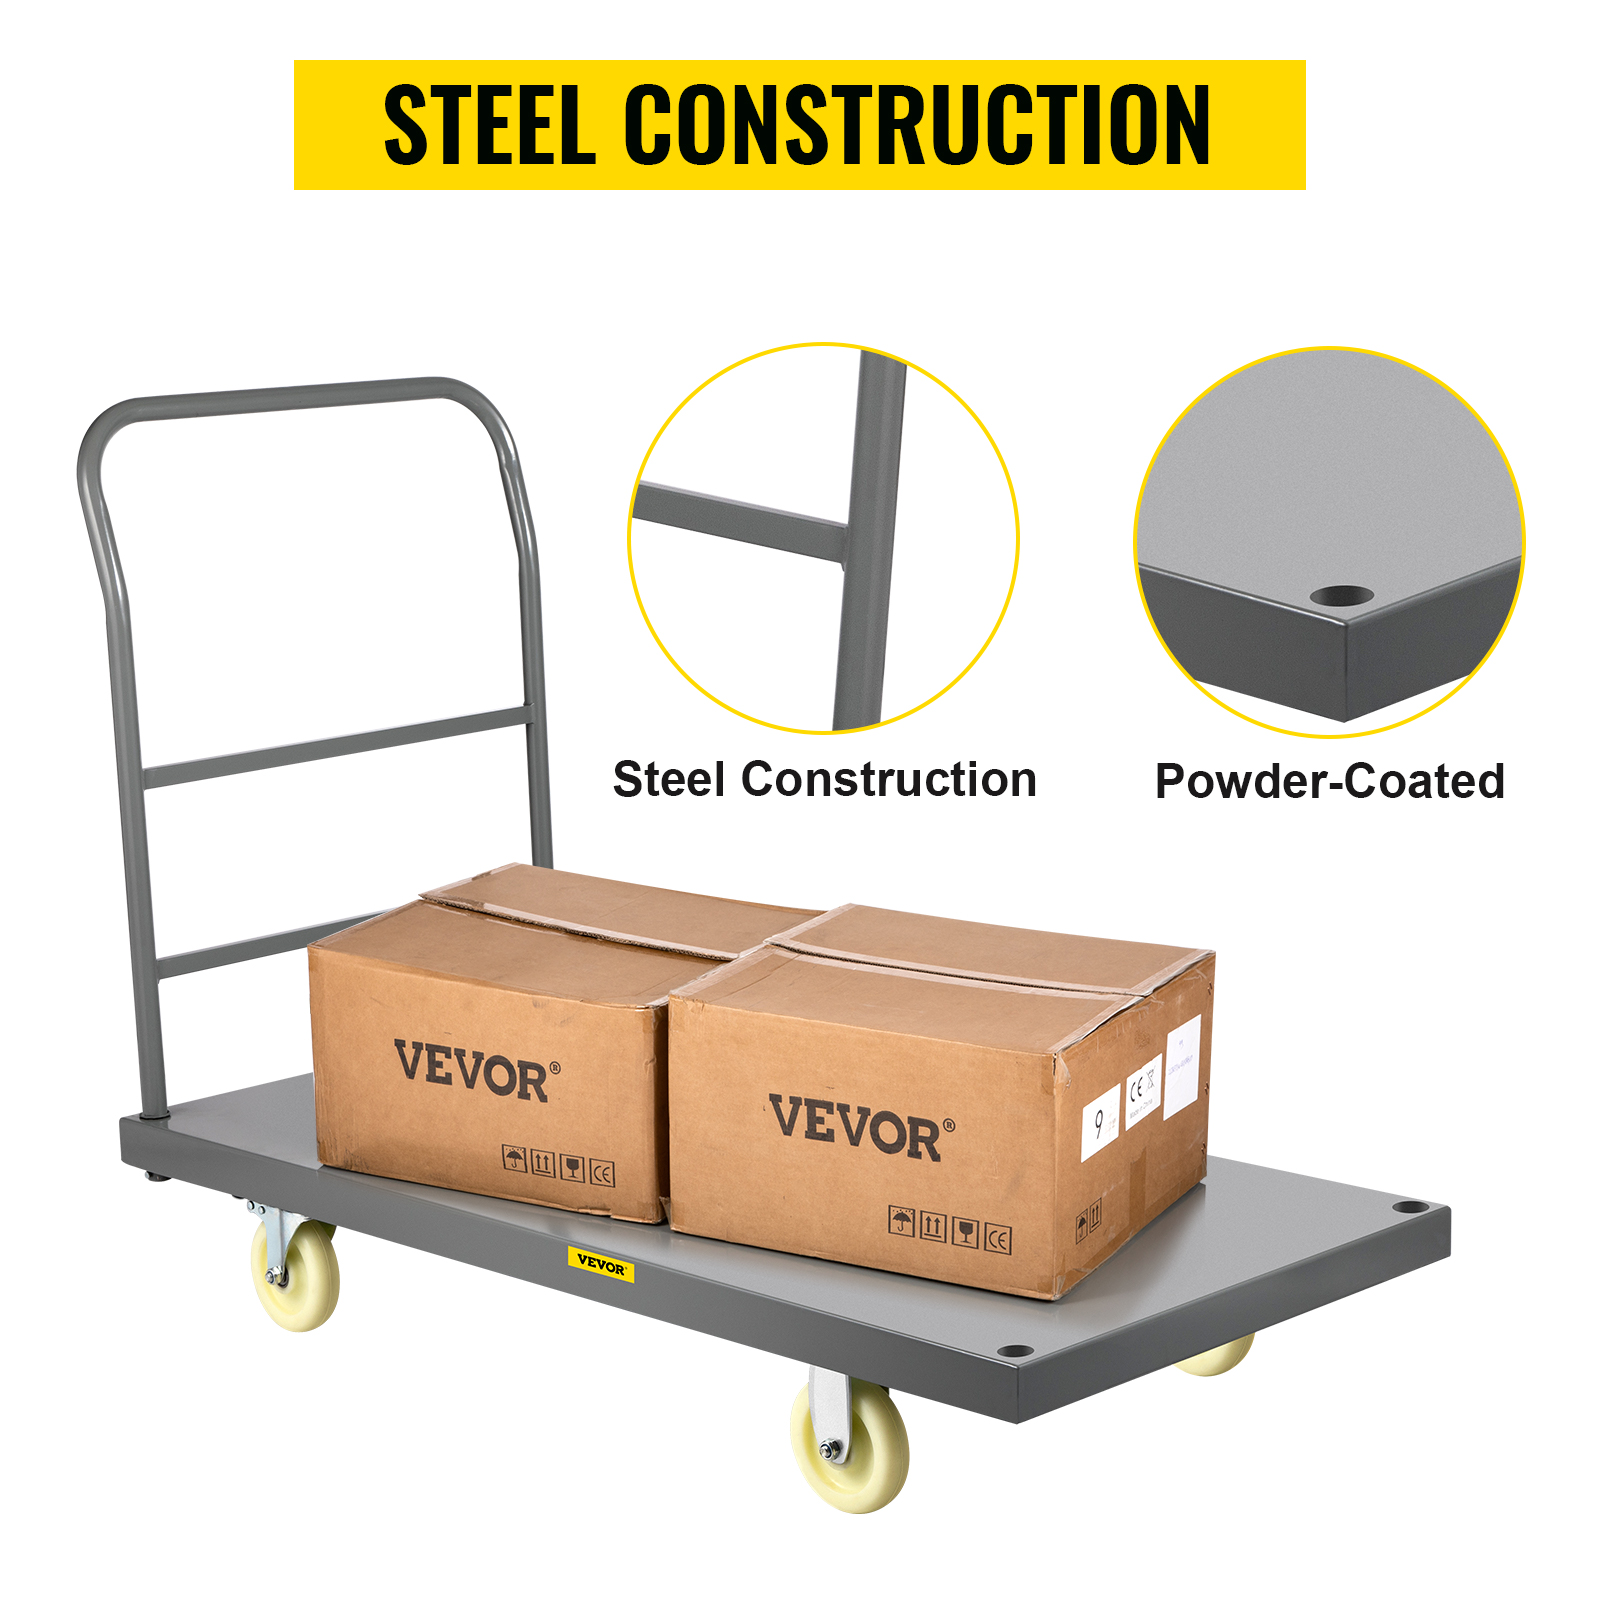 Heavy Duty Steel Flat Bed Cart - Polyurethane Wheels - Capacity: 2,000 lbs  - Deck LxW:: 60 x 30